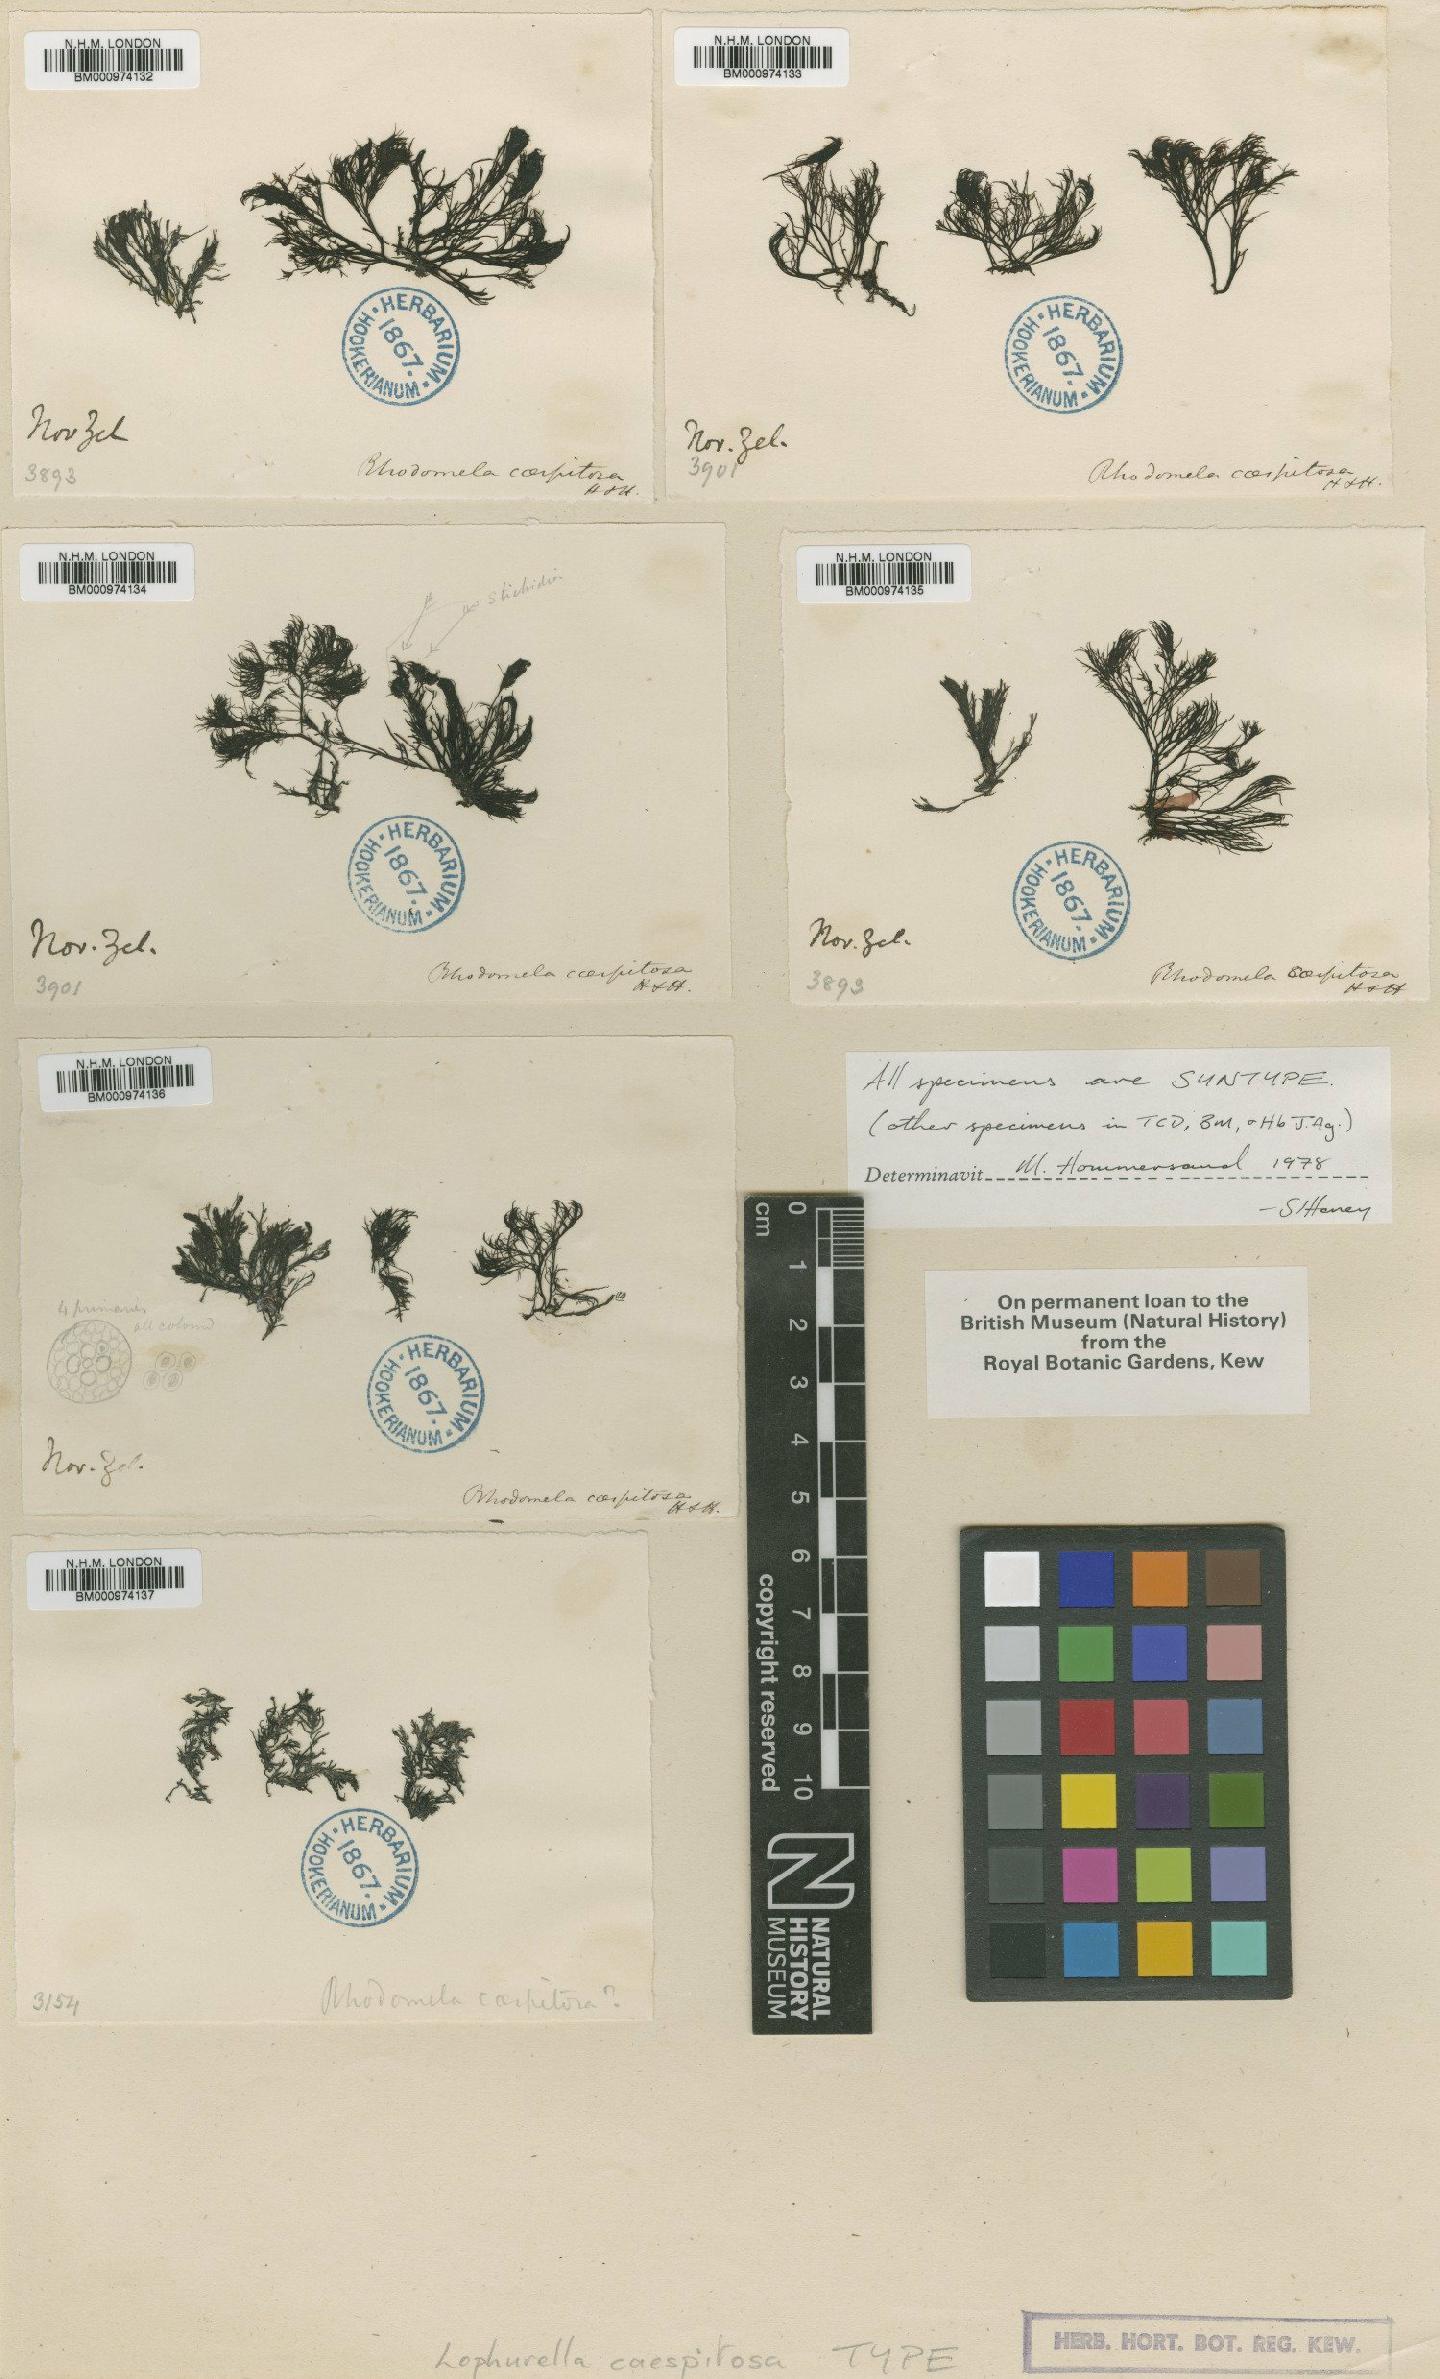 To NHMUK collection (Lophurella caespitosa (Harv.) Falkenb.; Syntype; NHMUK:ecatalogue:722728)